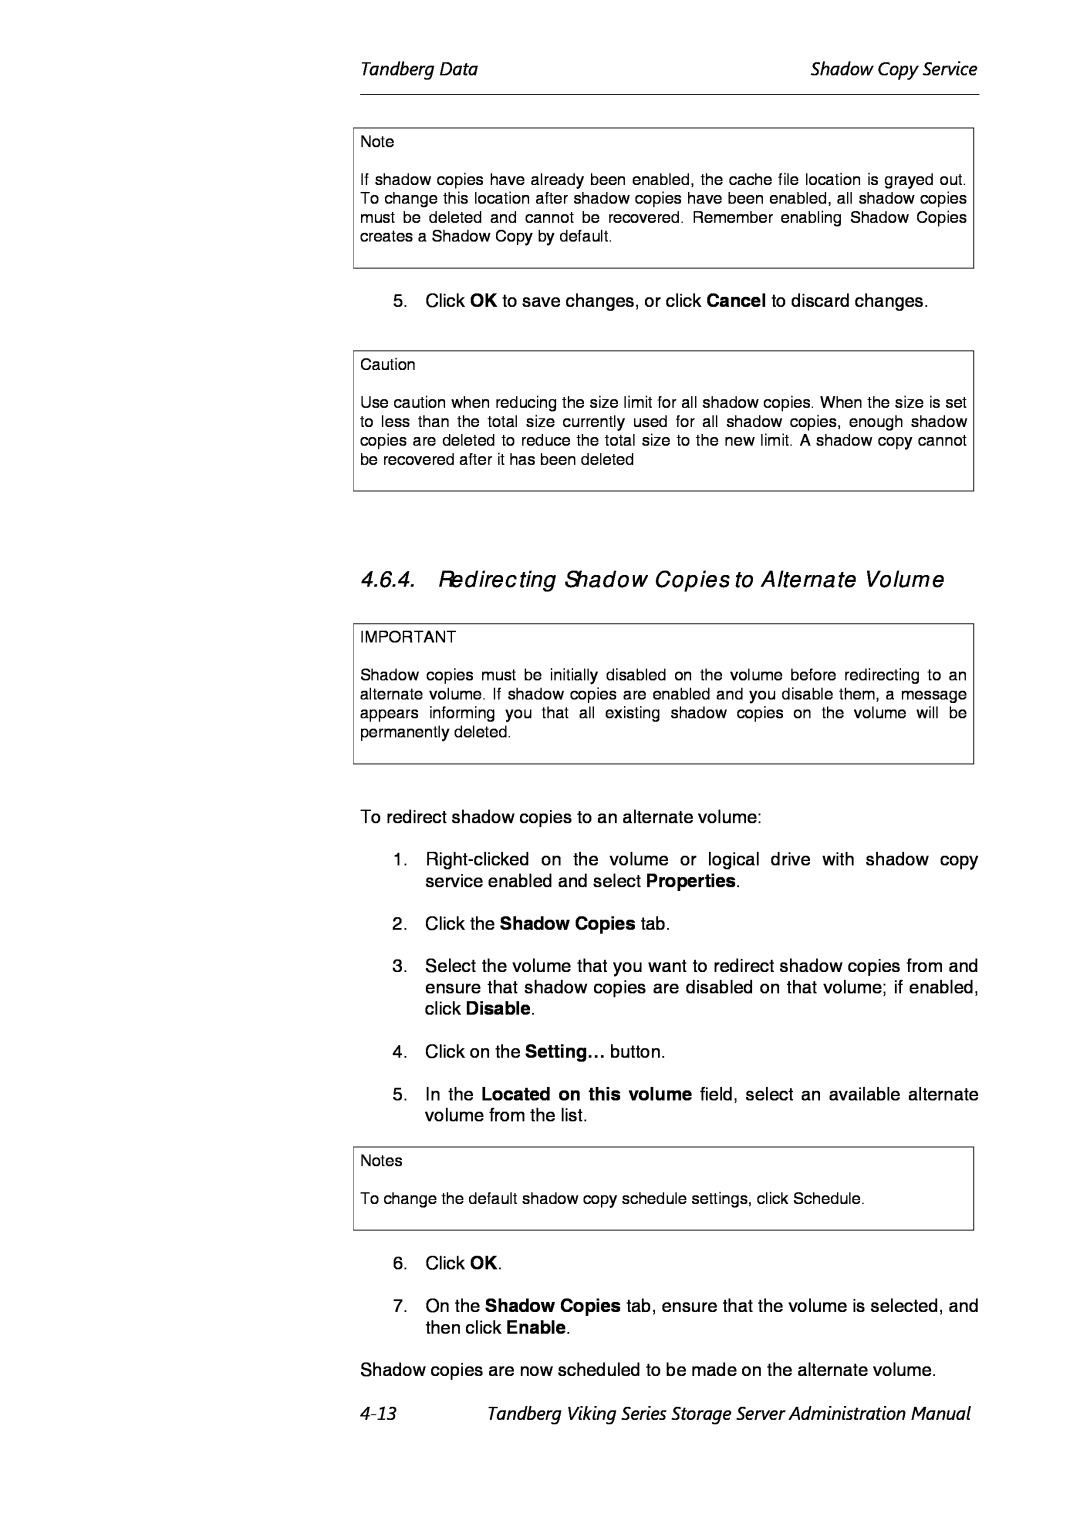 Tandberg Data Viking FS-1600 manual Redirecting Shadow Copies to Alternate Volume, Tandberg DataShadow Copy Service, 4-13 